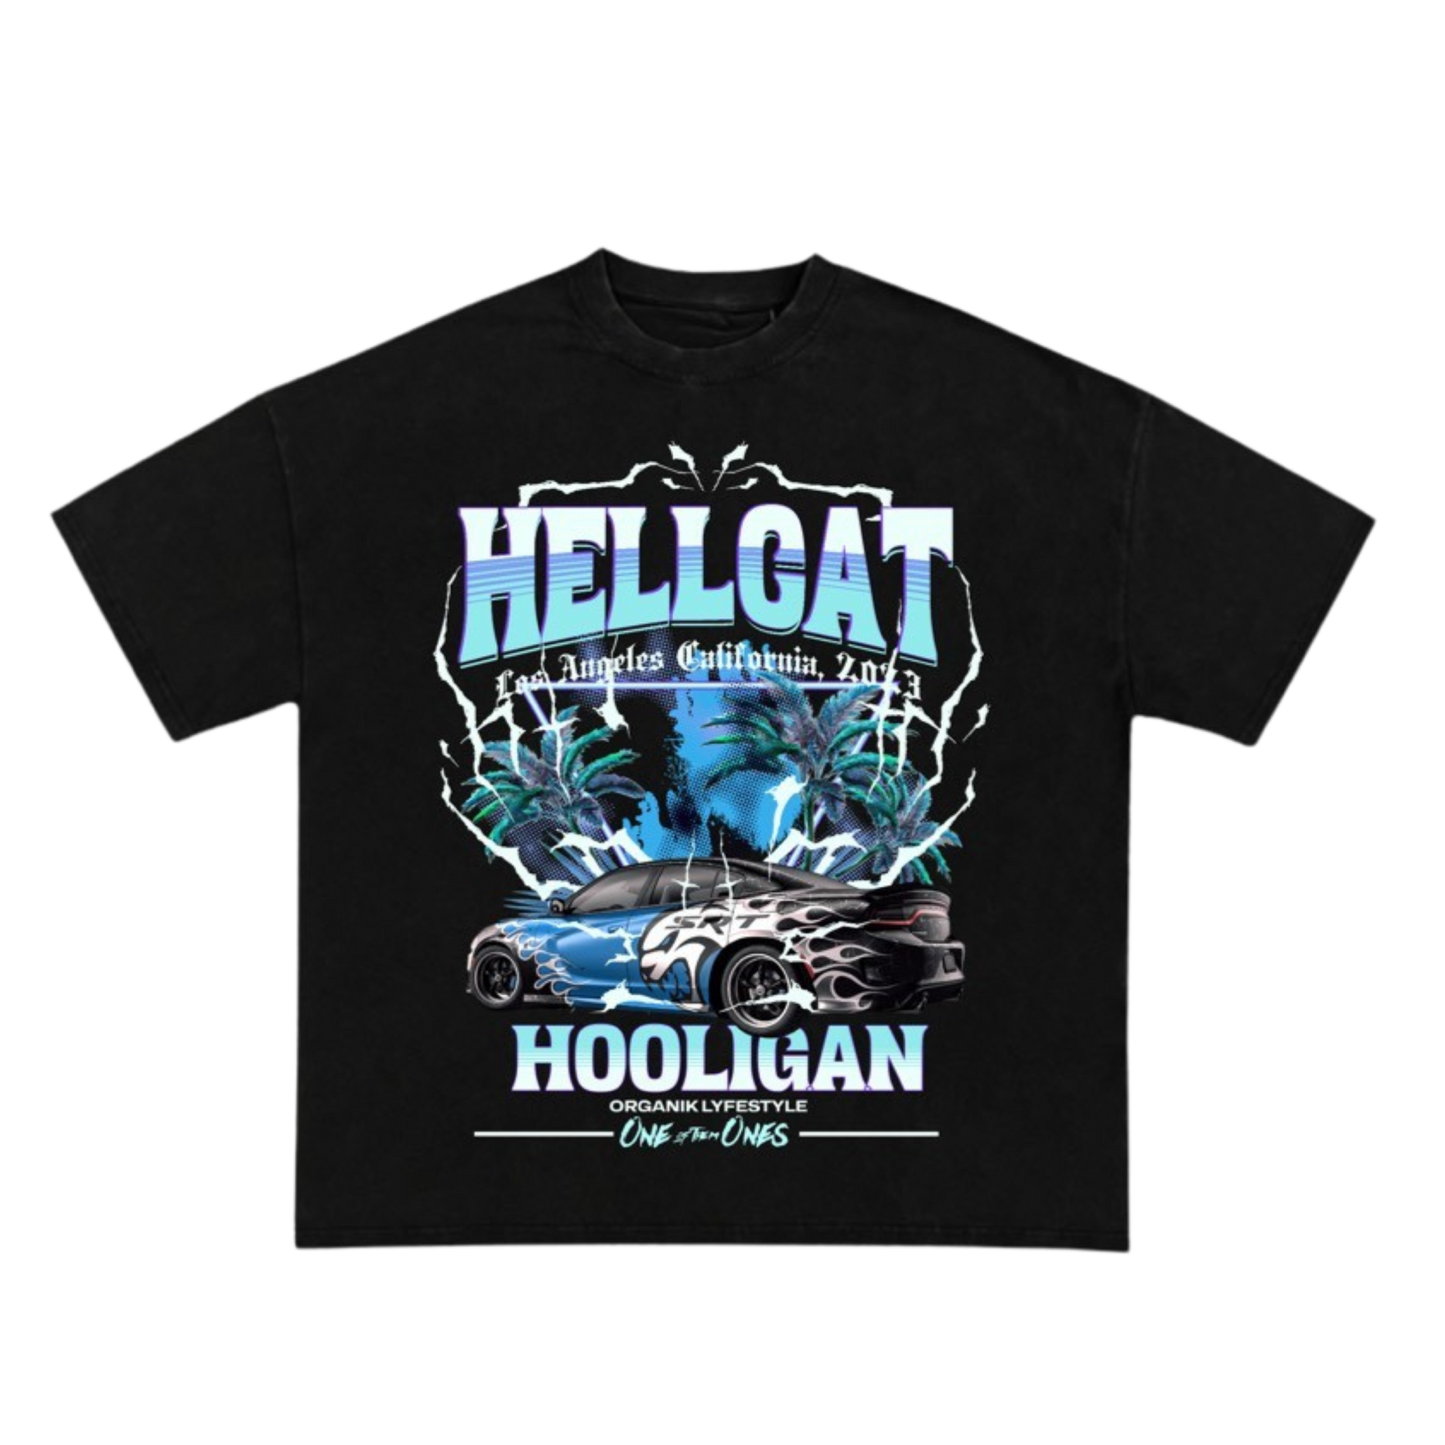 Organik Lyfestyle - Hellcat Hooligan T-Shirt - Black & Blue